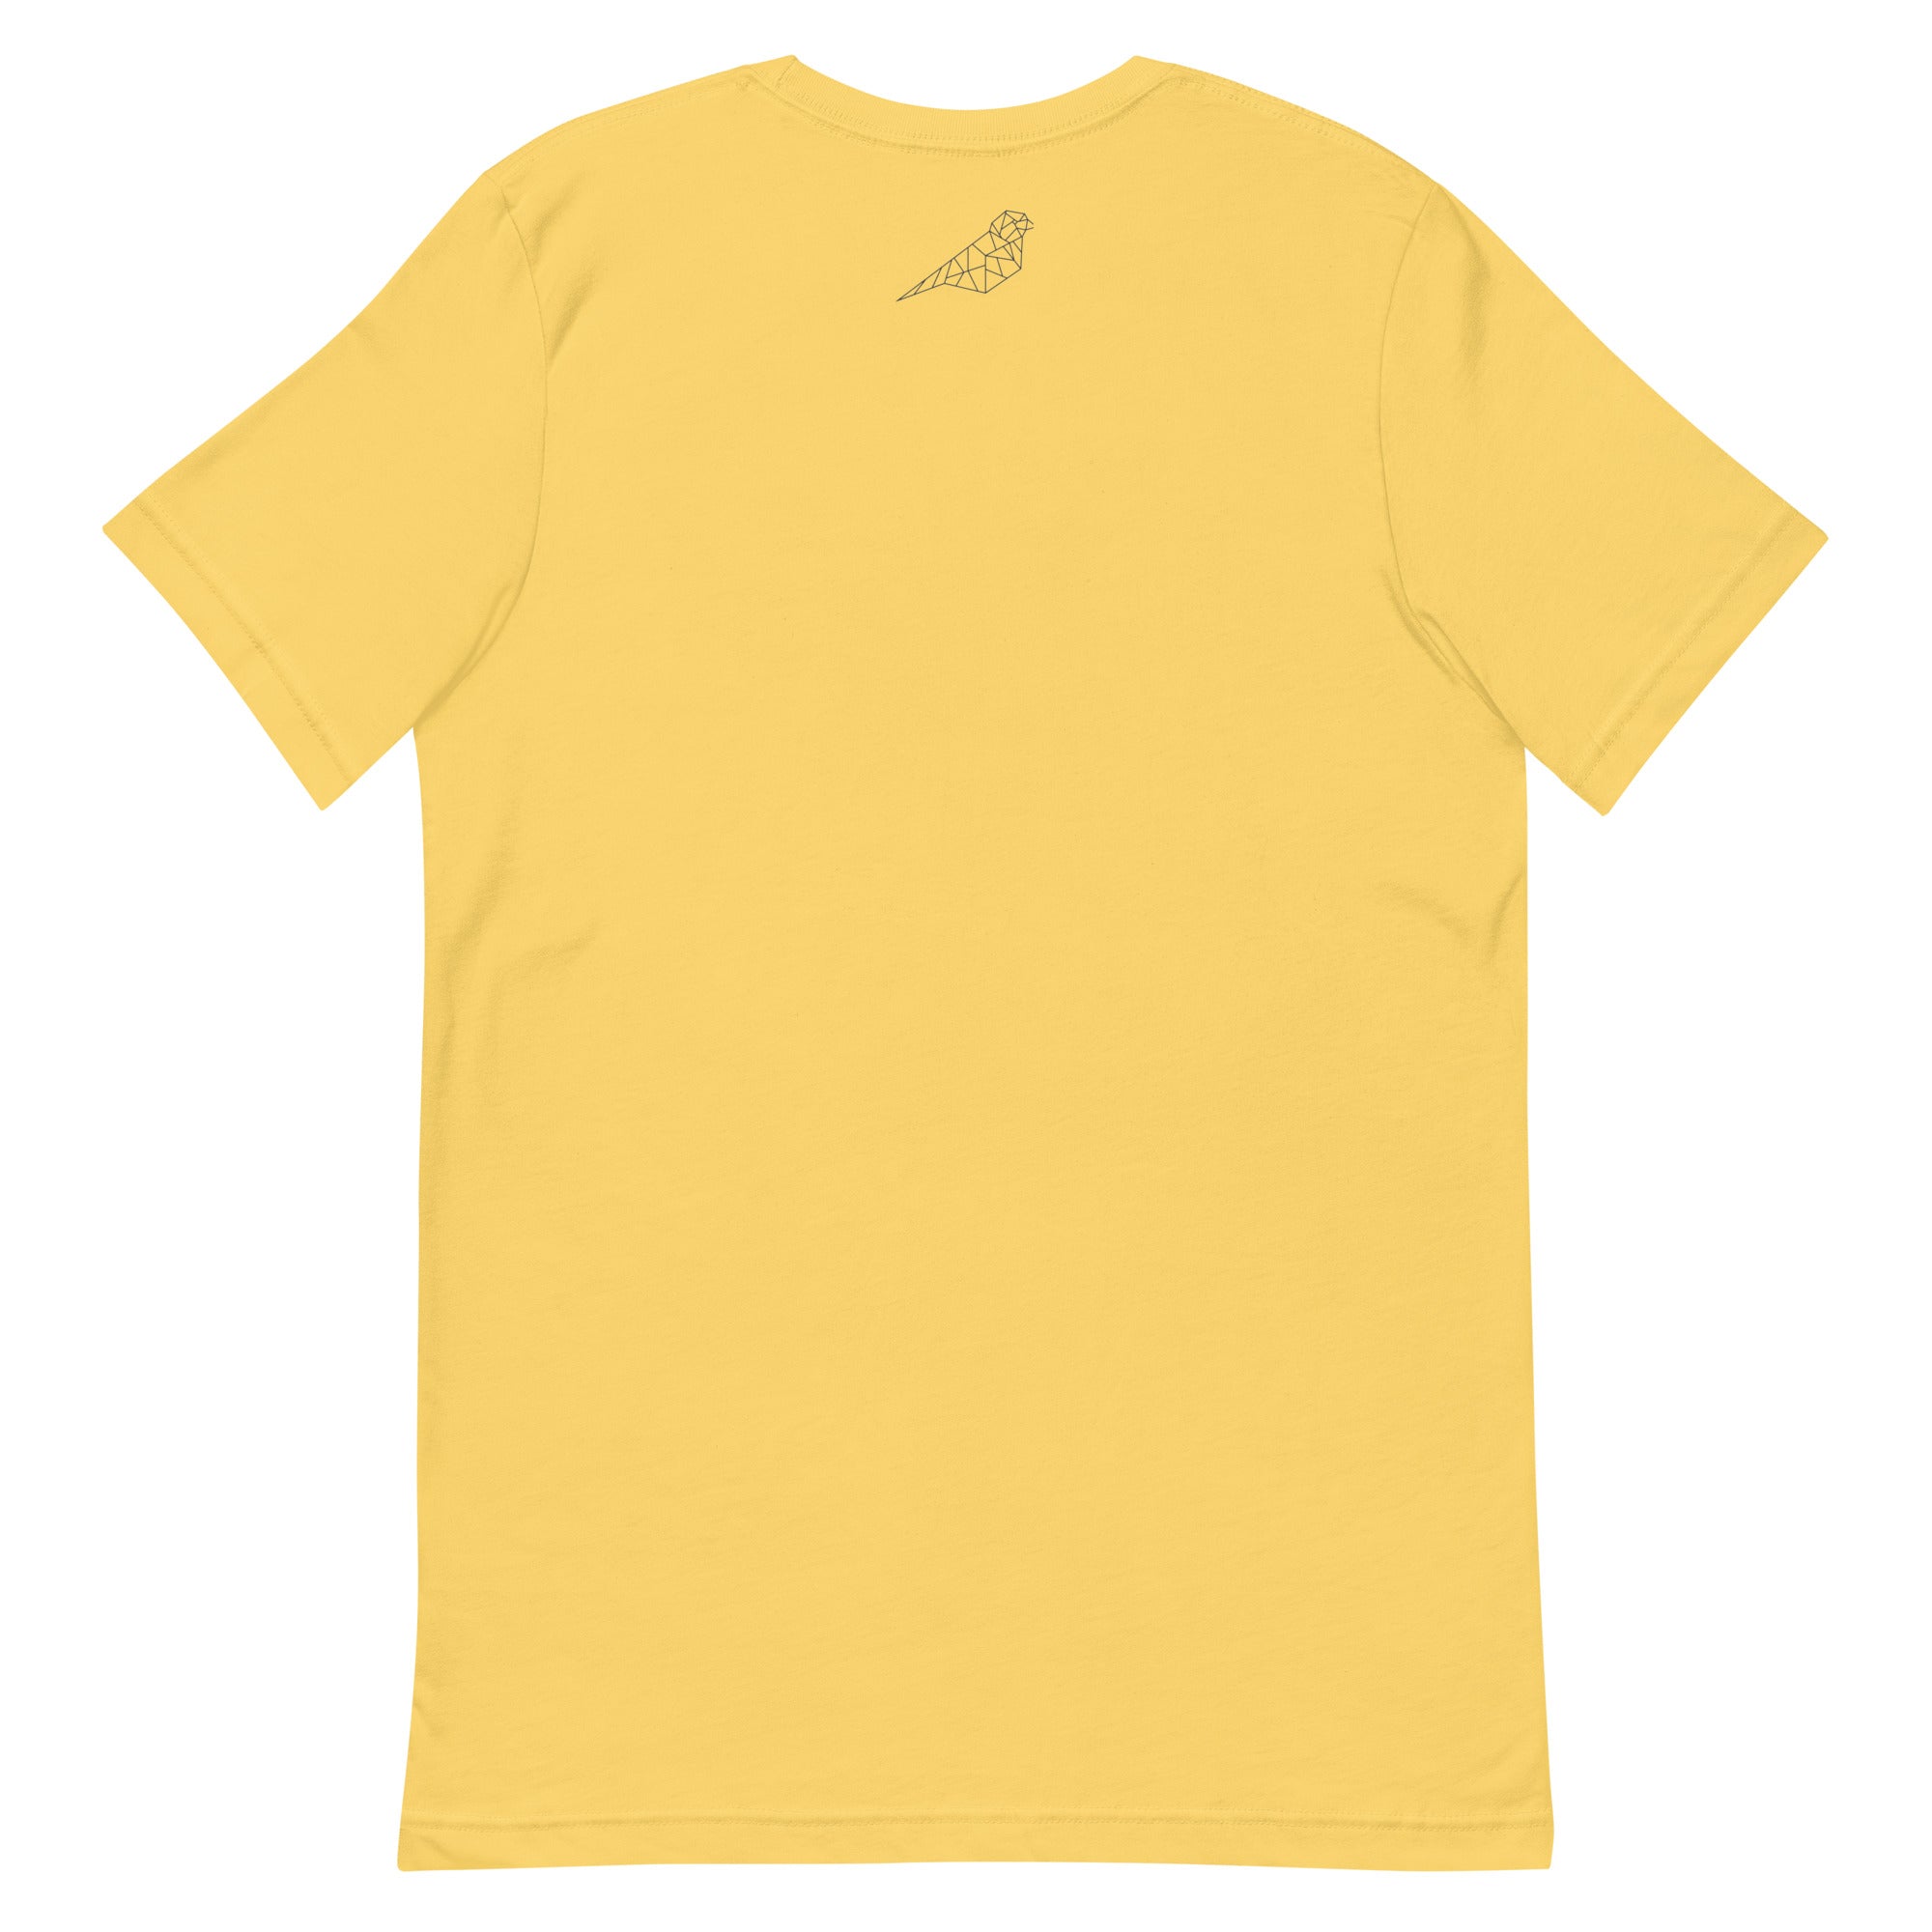 Yellow "Canary" T-Shirt